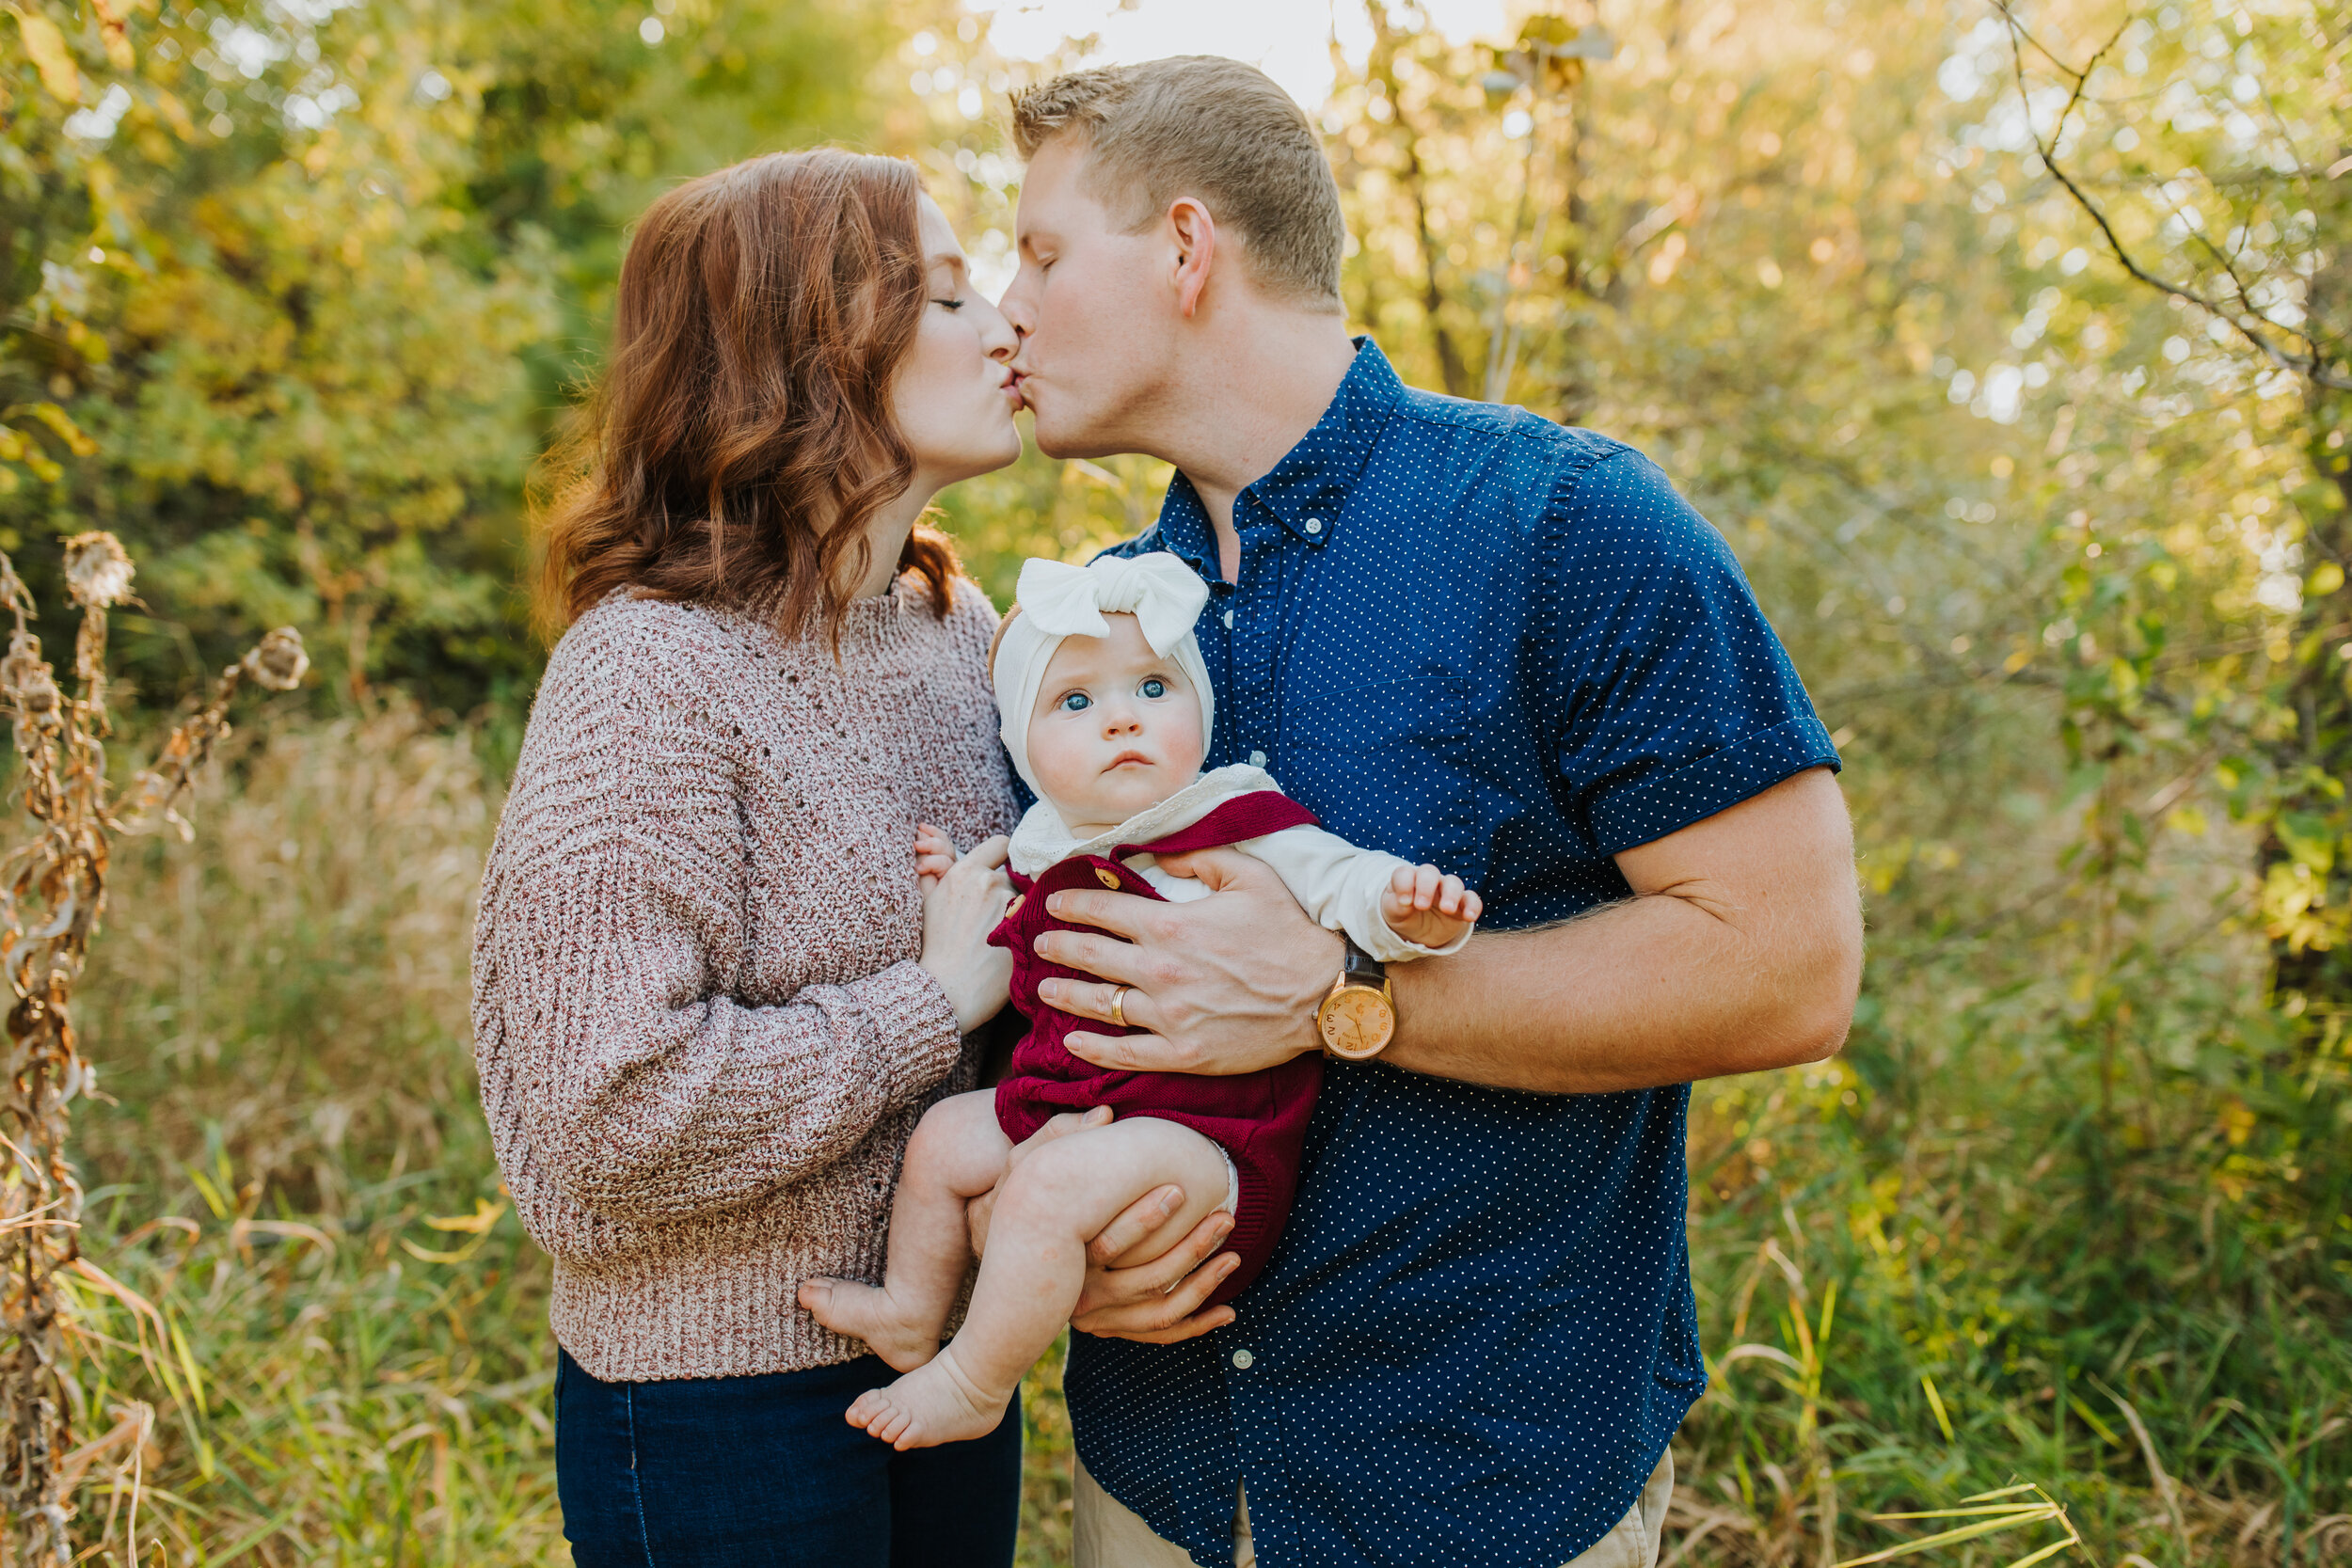 Unger Family Photos 2020 - Nathaniel Jensen Photography - Omaha Nebraska Family Photographer-14.jpg